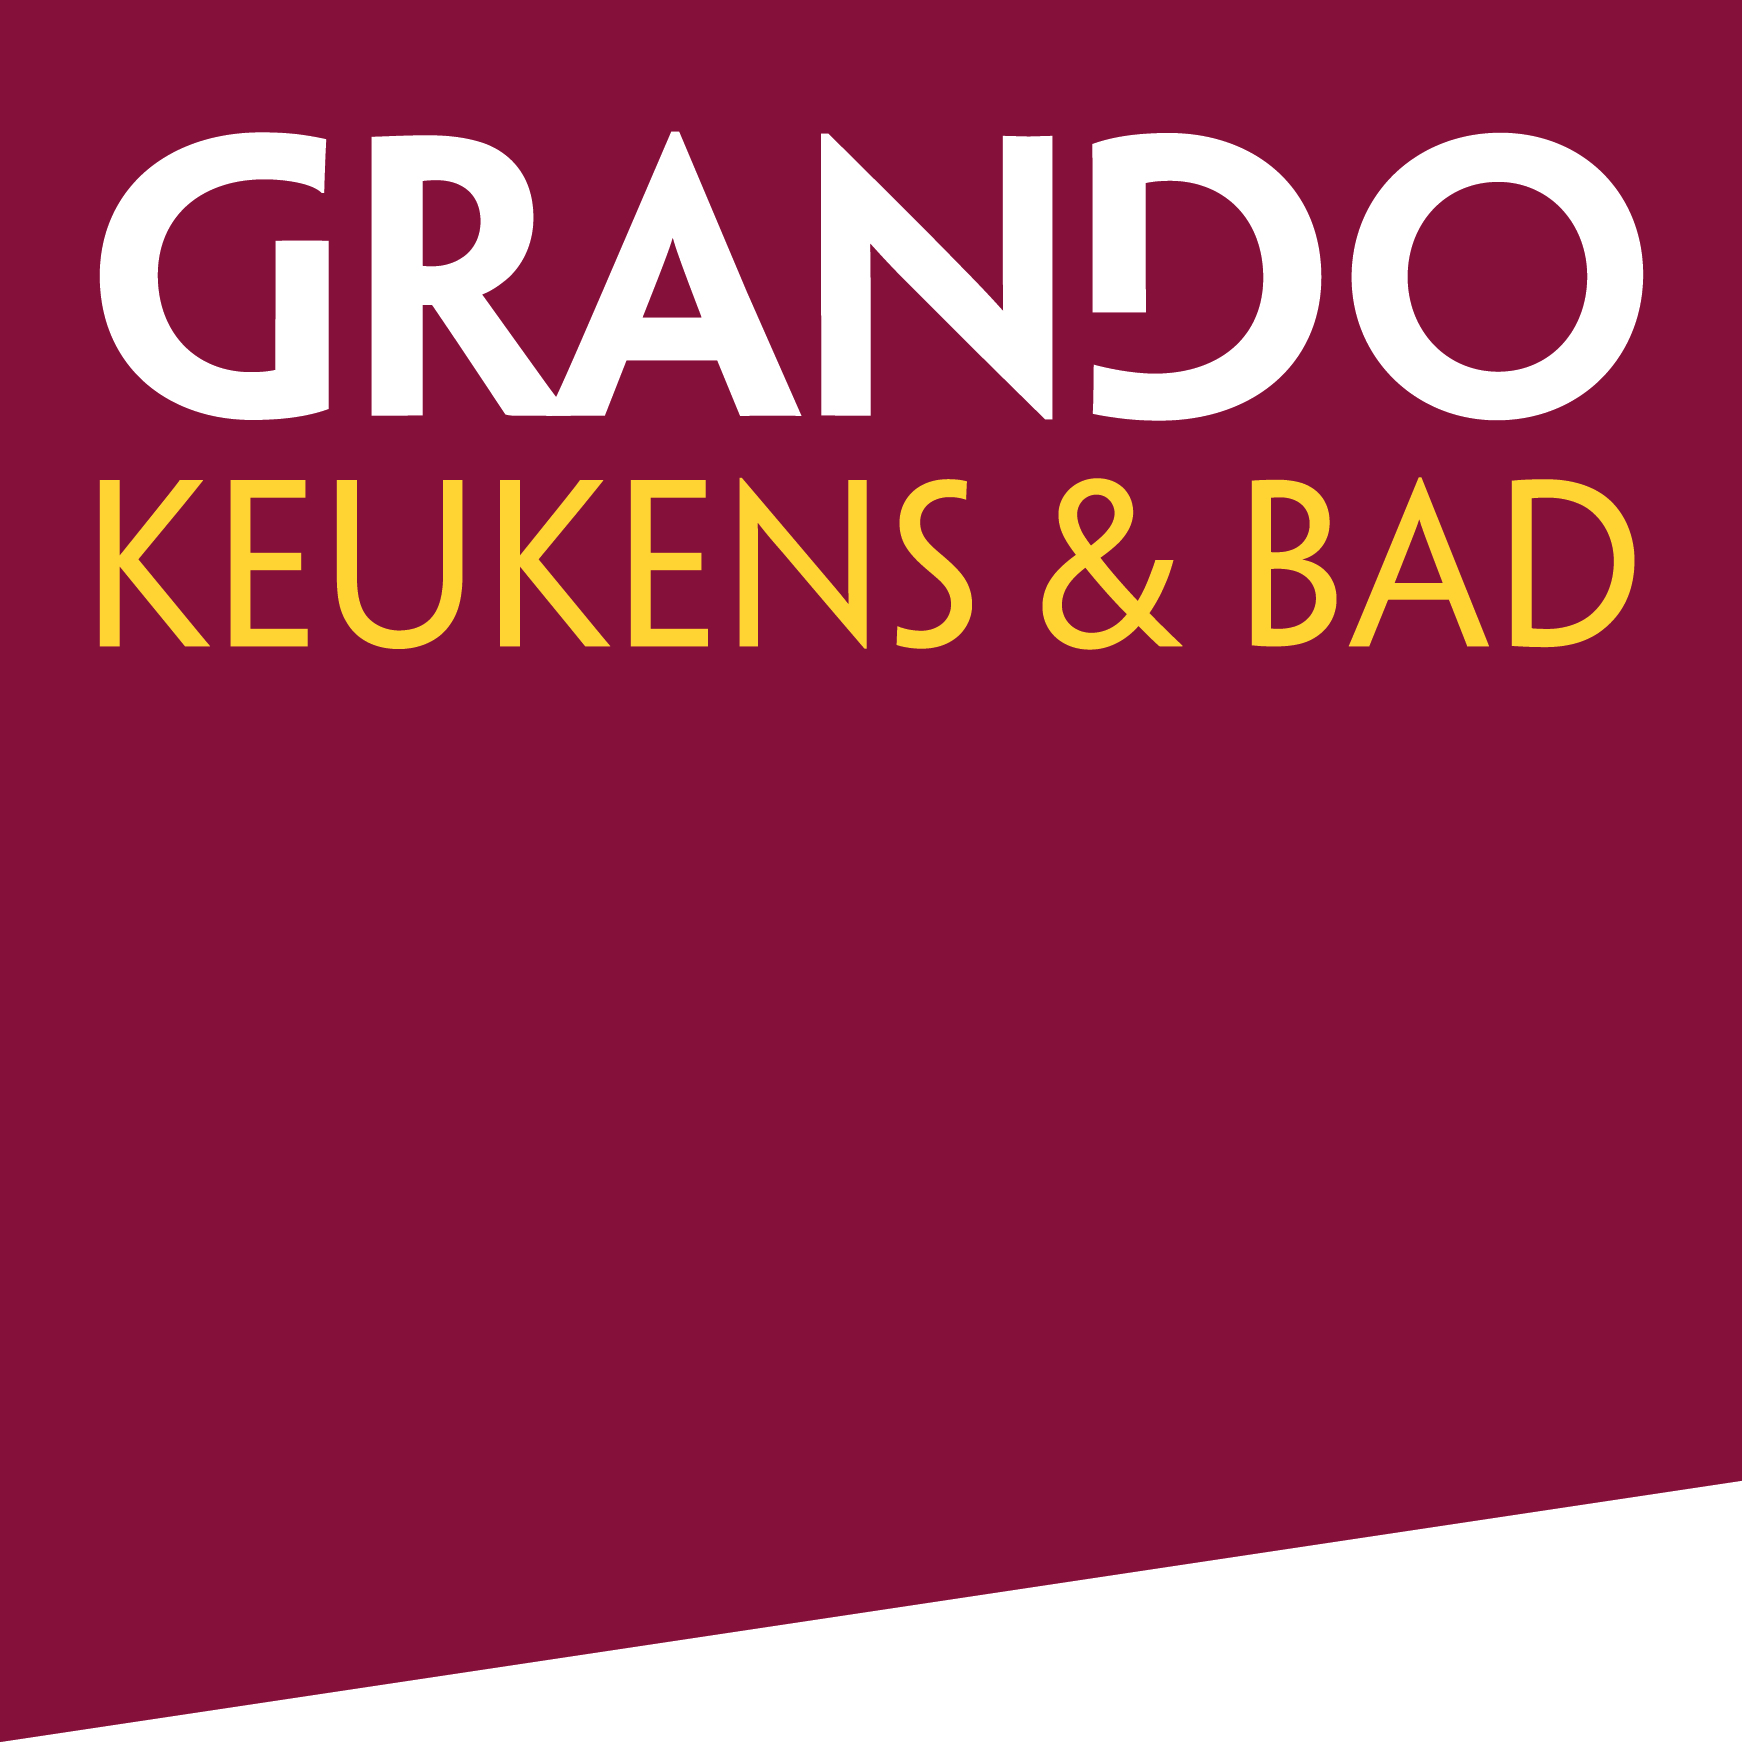 Grando Keukens & Bad franchise